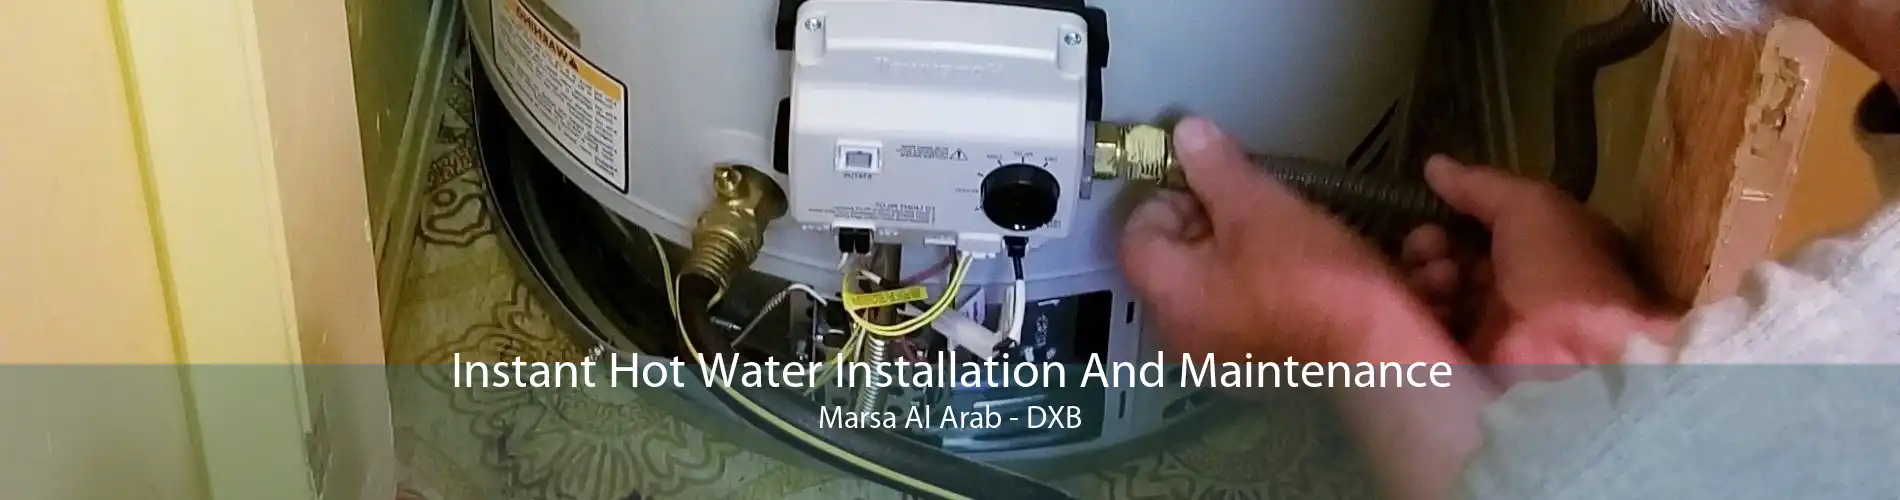 Instant Hot Water Installation And Maintenance Marsa Al Arab - DXB